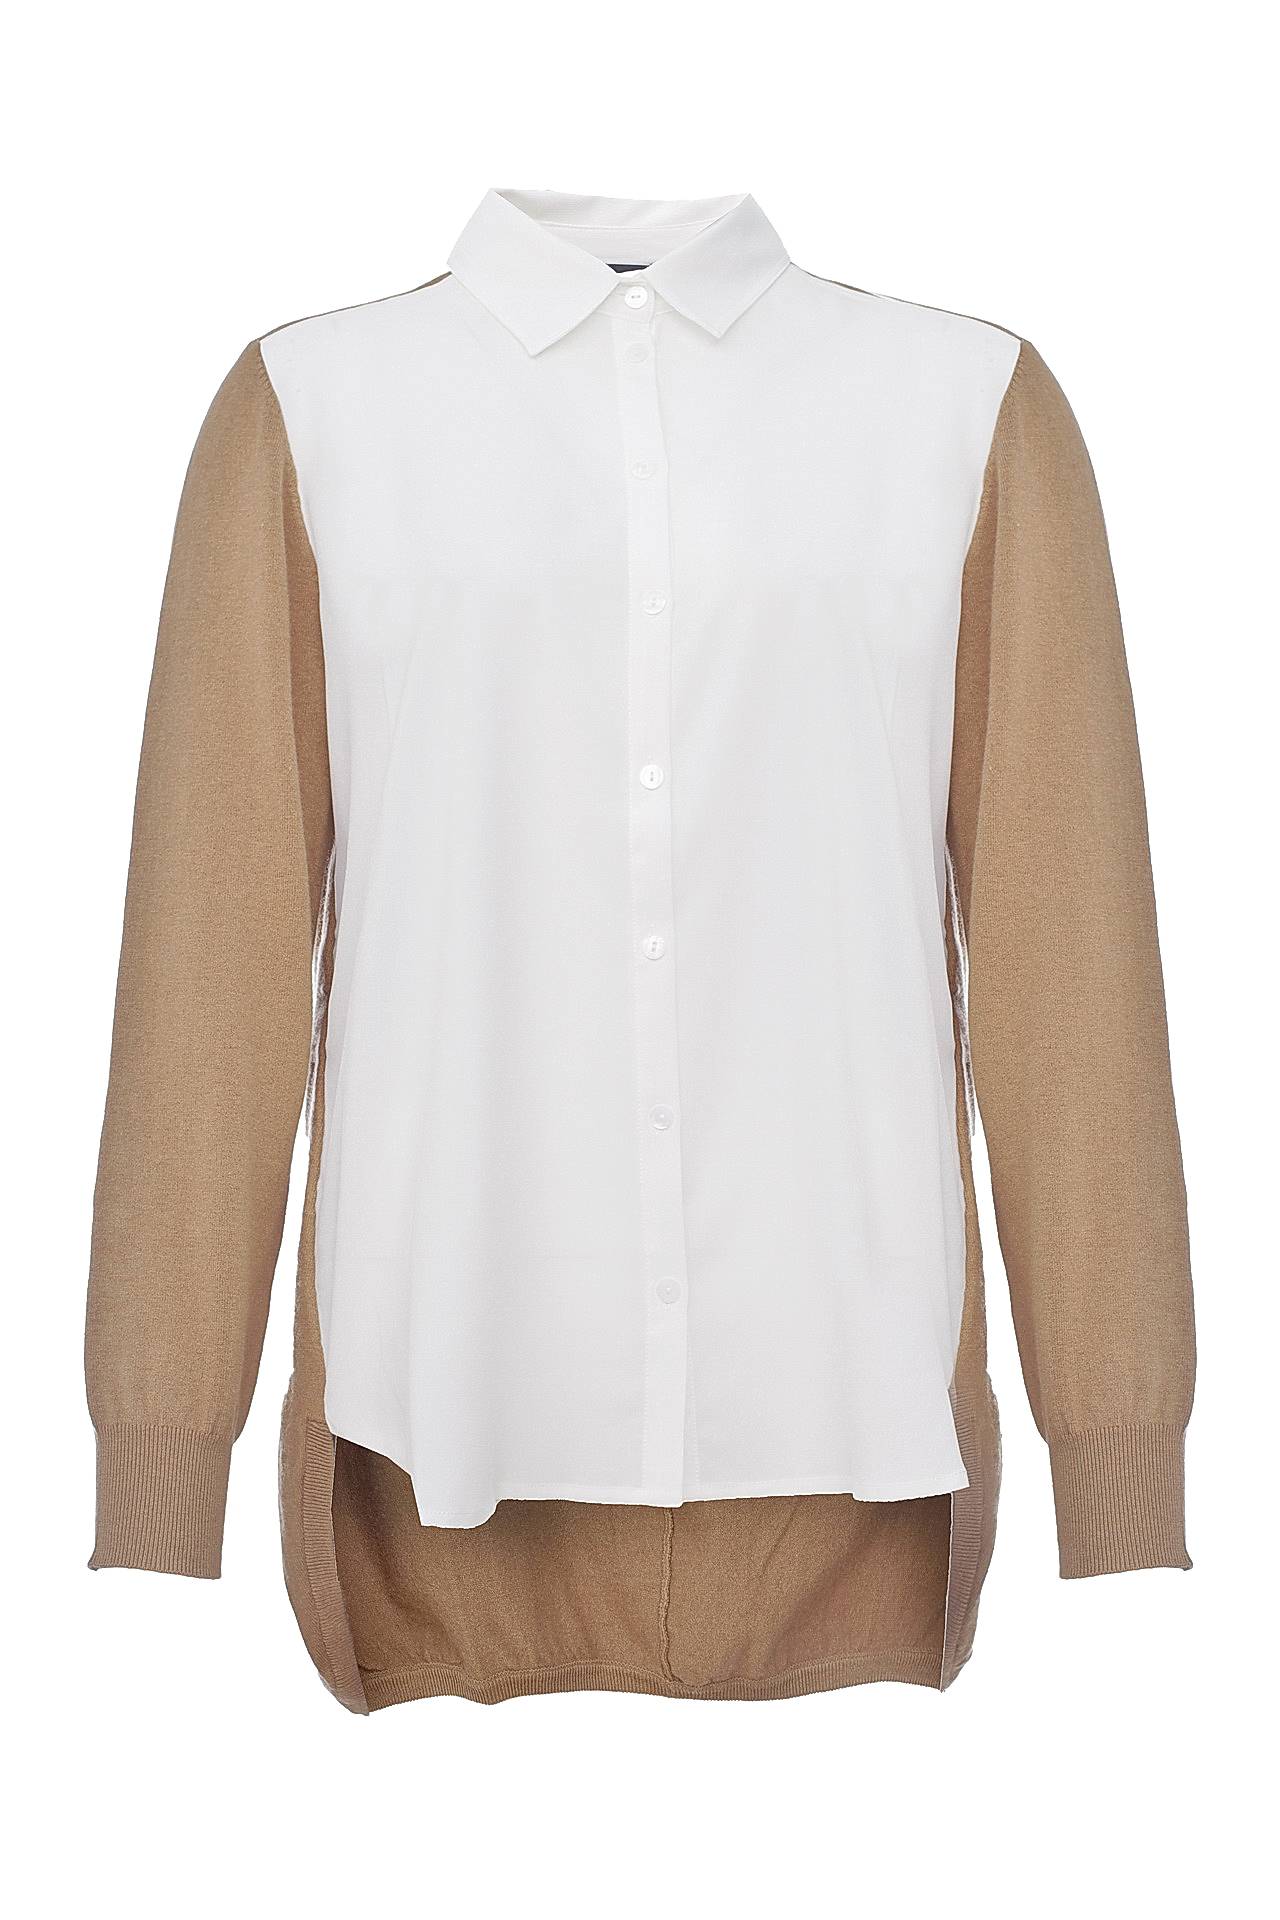 Одежда женская Рубашка TWIN-SET (TA63AA/17.1). Купить за 7250 руб.